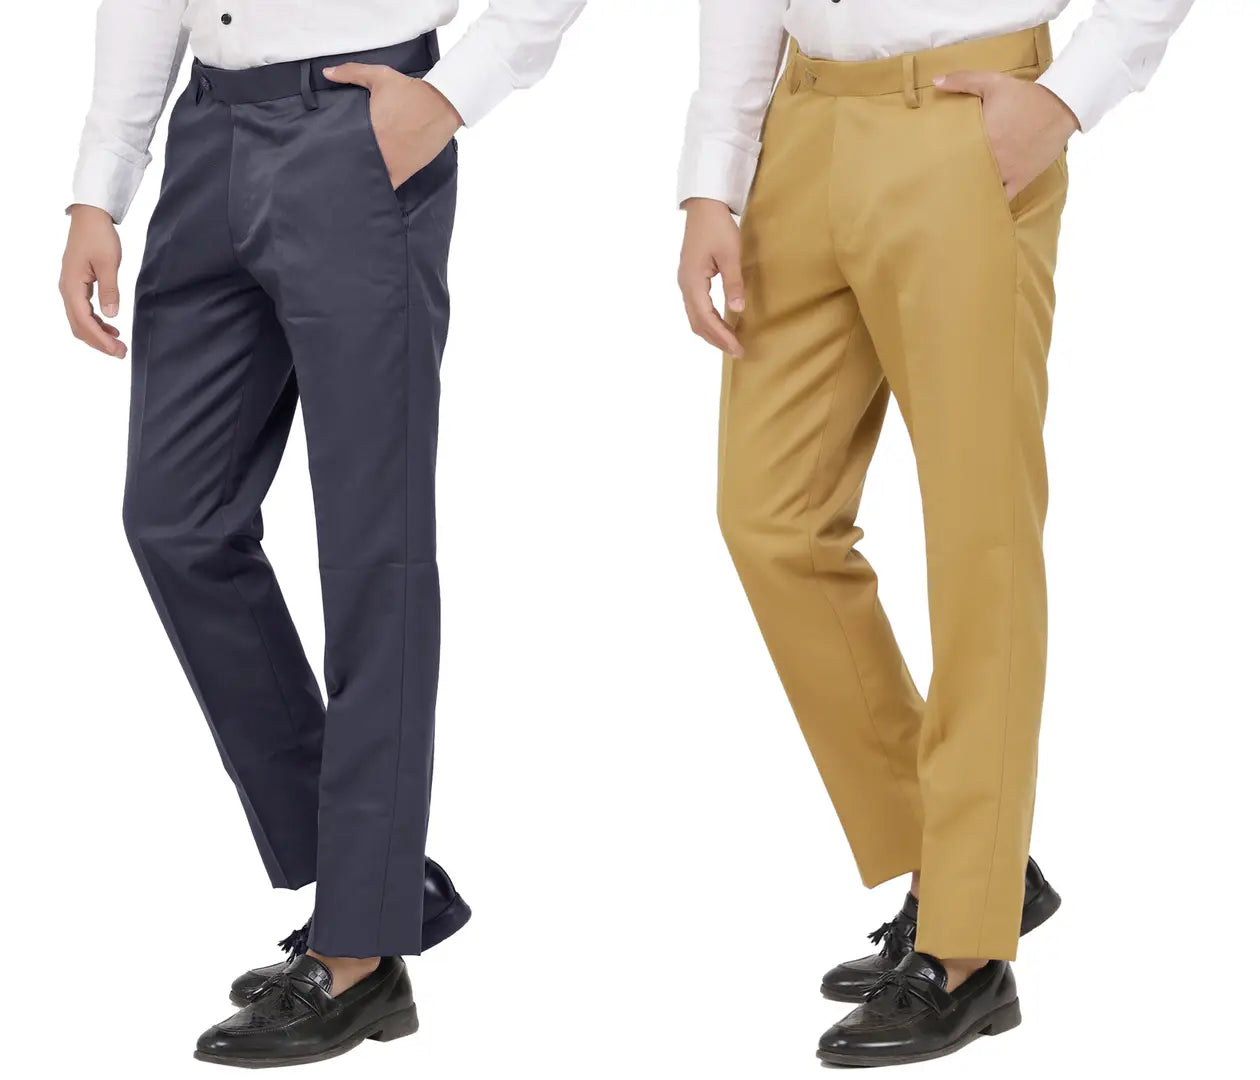 Kundan Men Poly-Viscose Blended Dark Grey and Khaki Formal Trousers ( Pack of 2 Trousers )